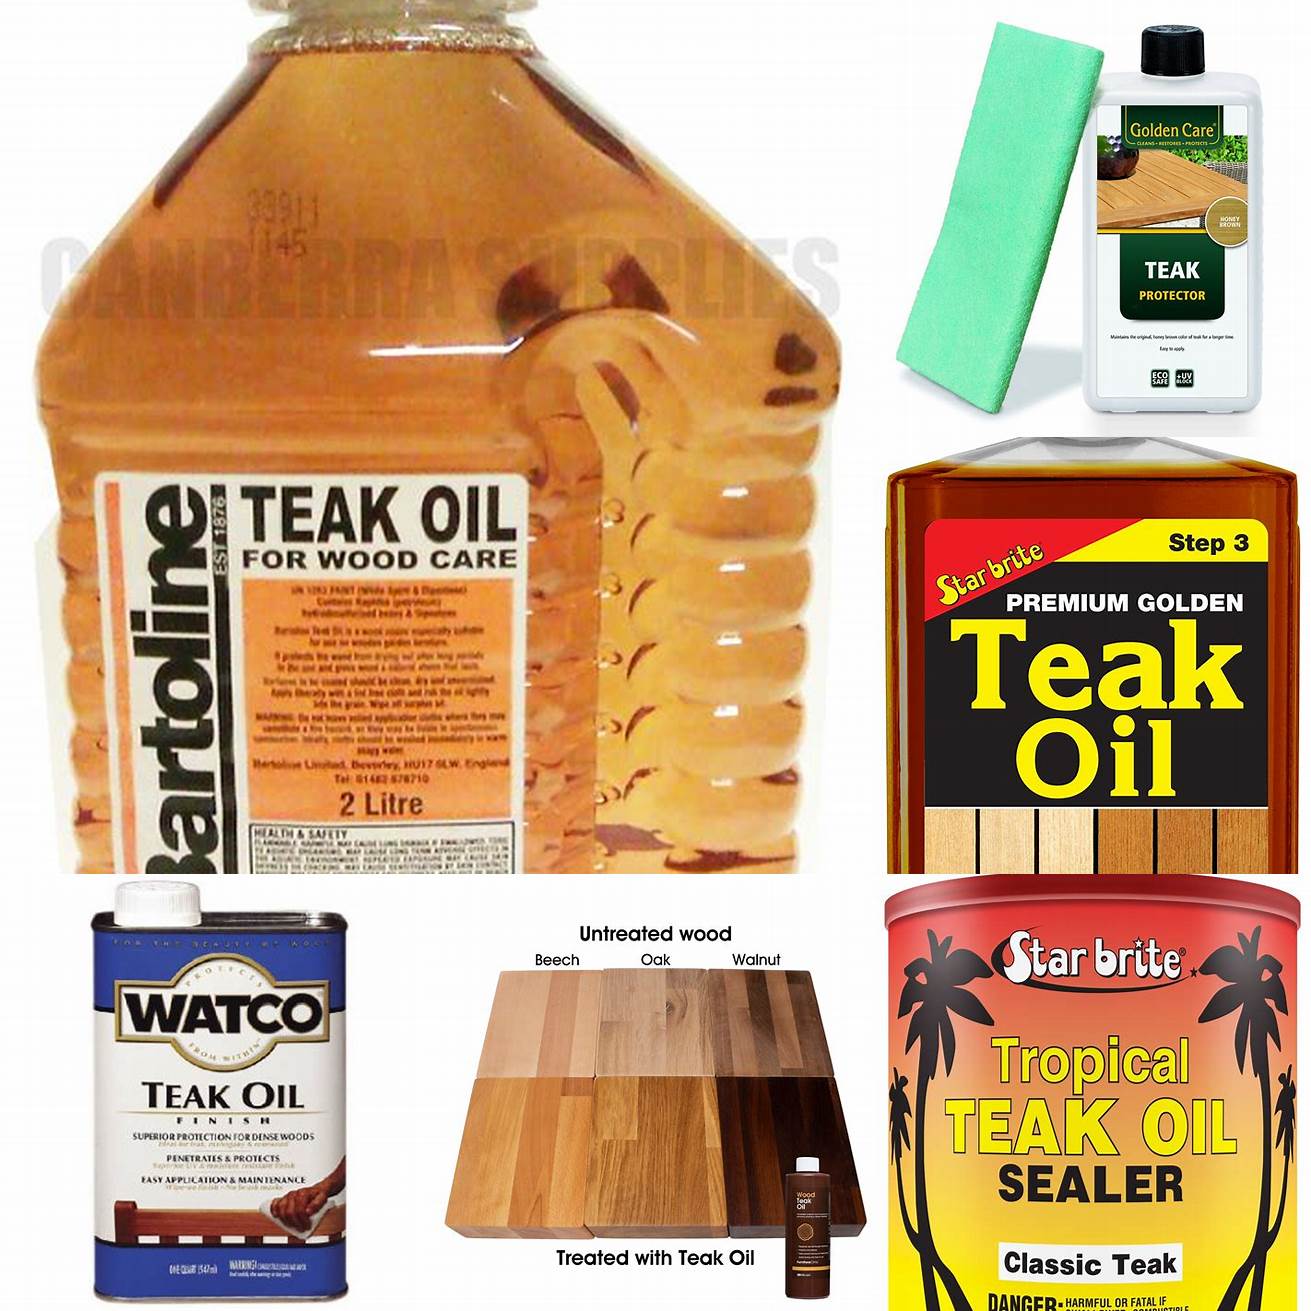 Teak Oil and Sealers